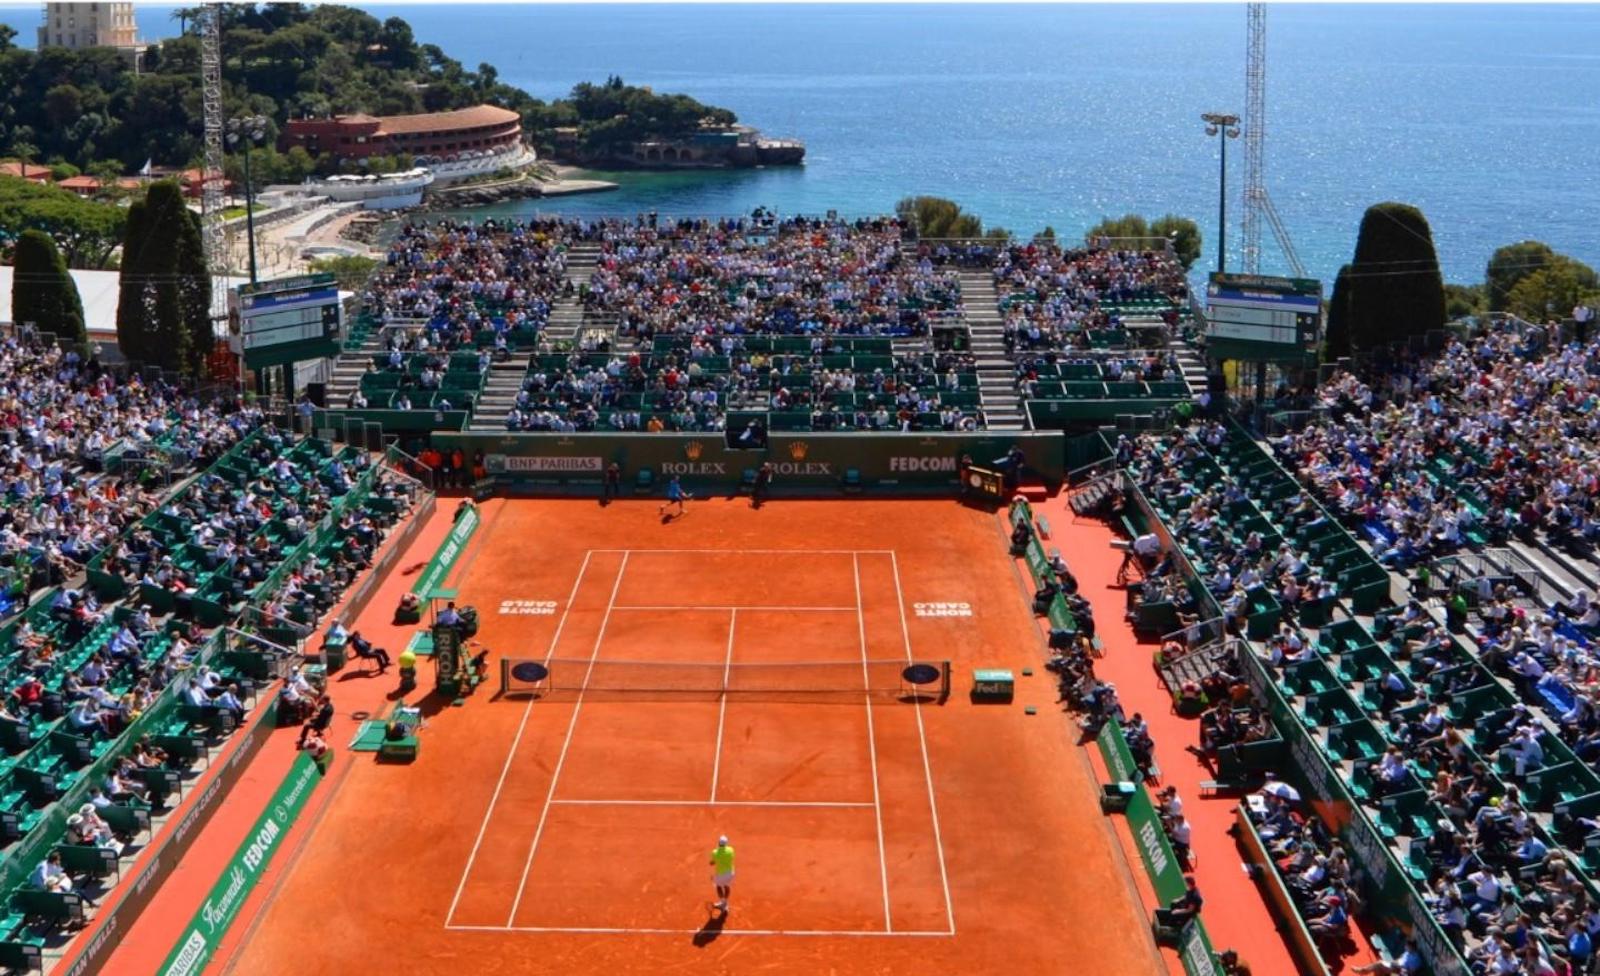 monte carlo masters tennis 2019